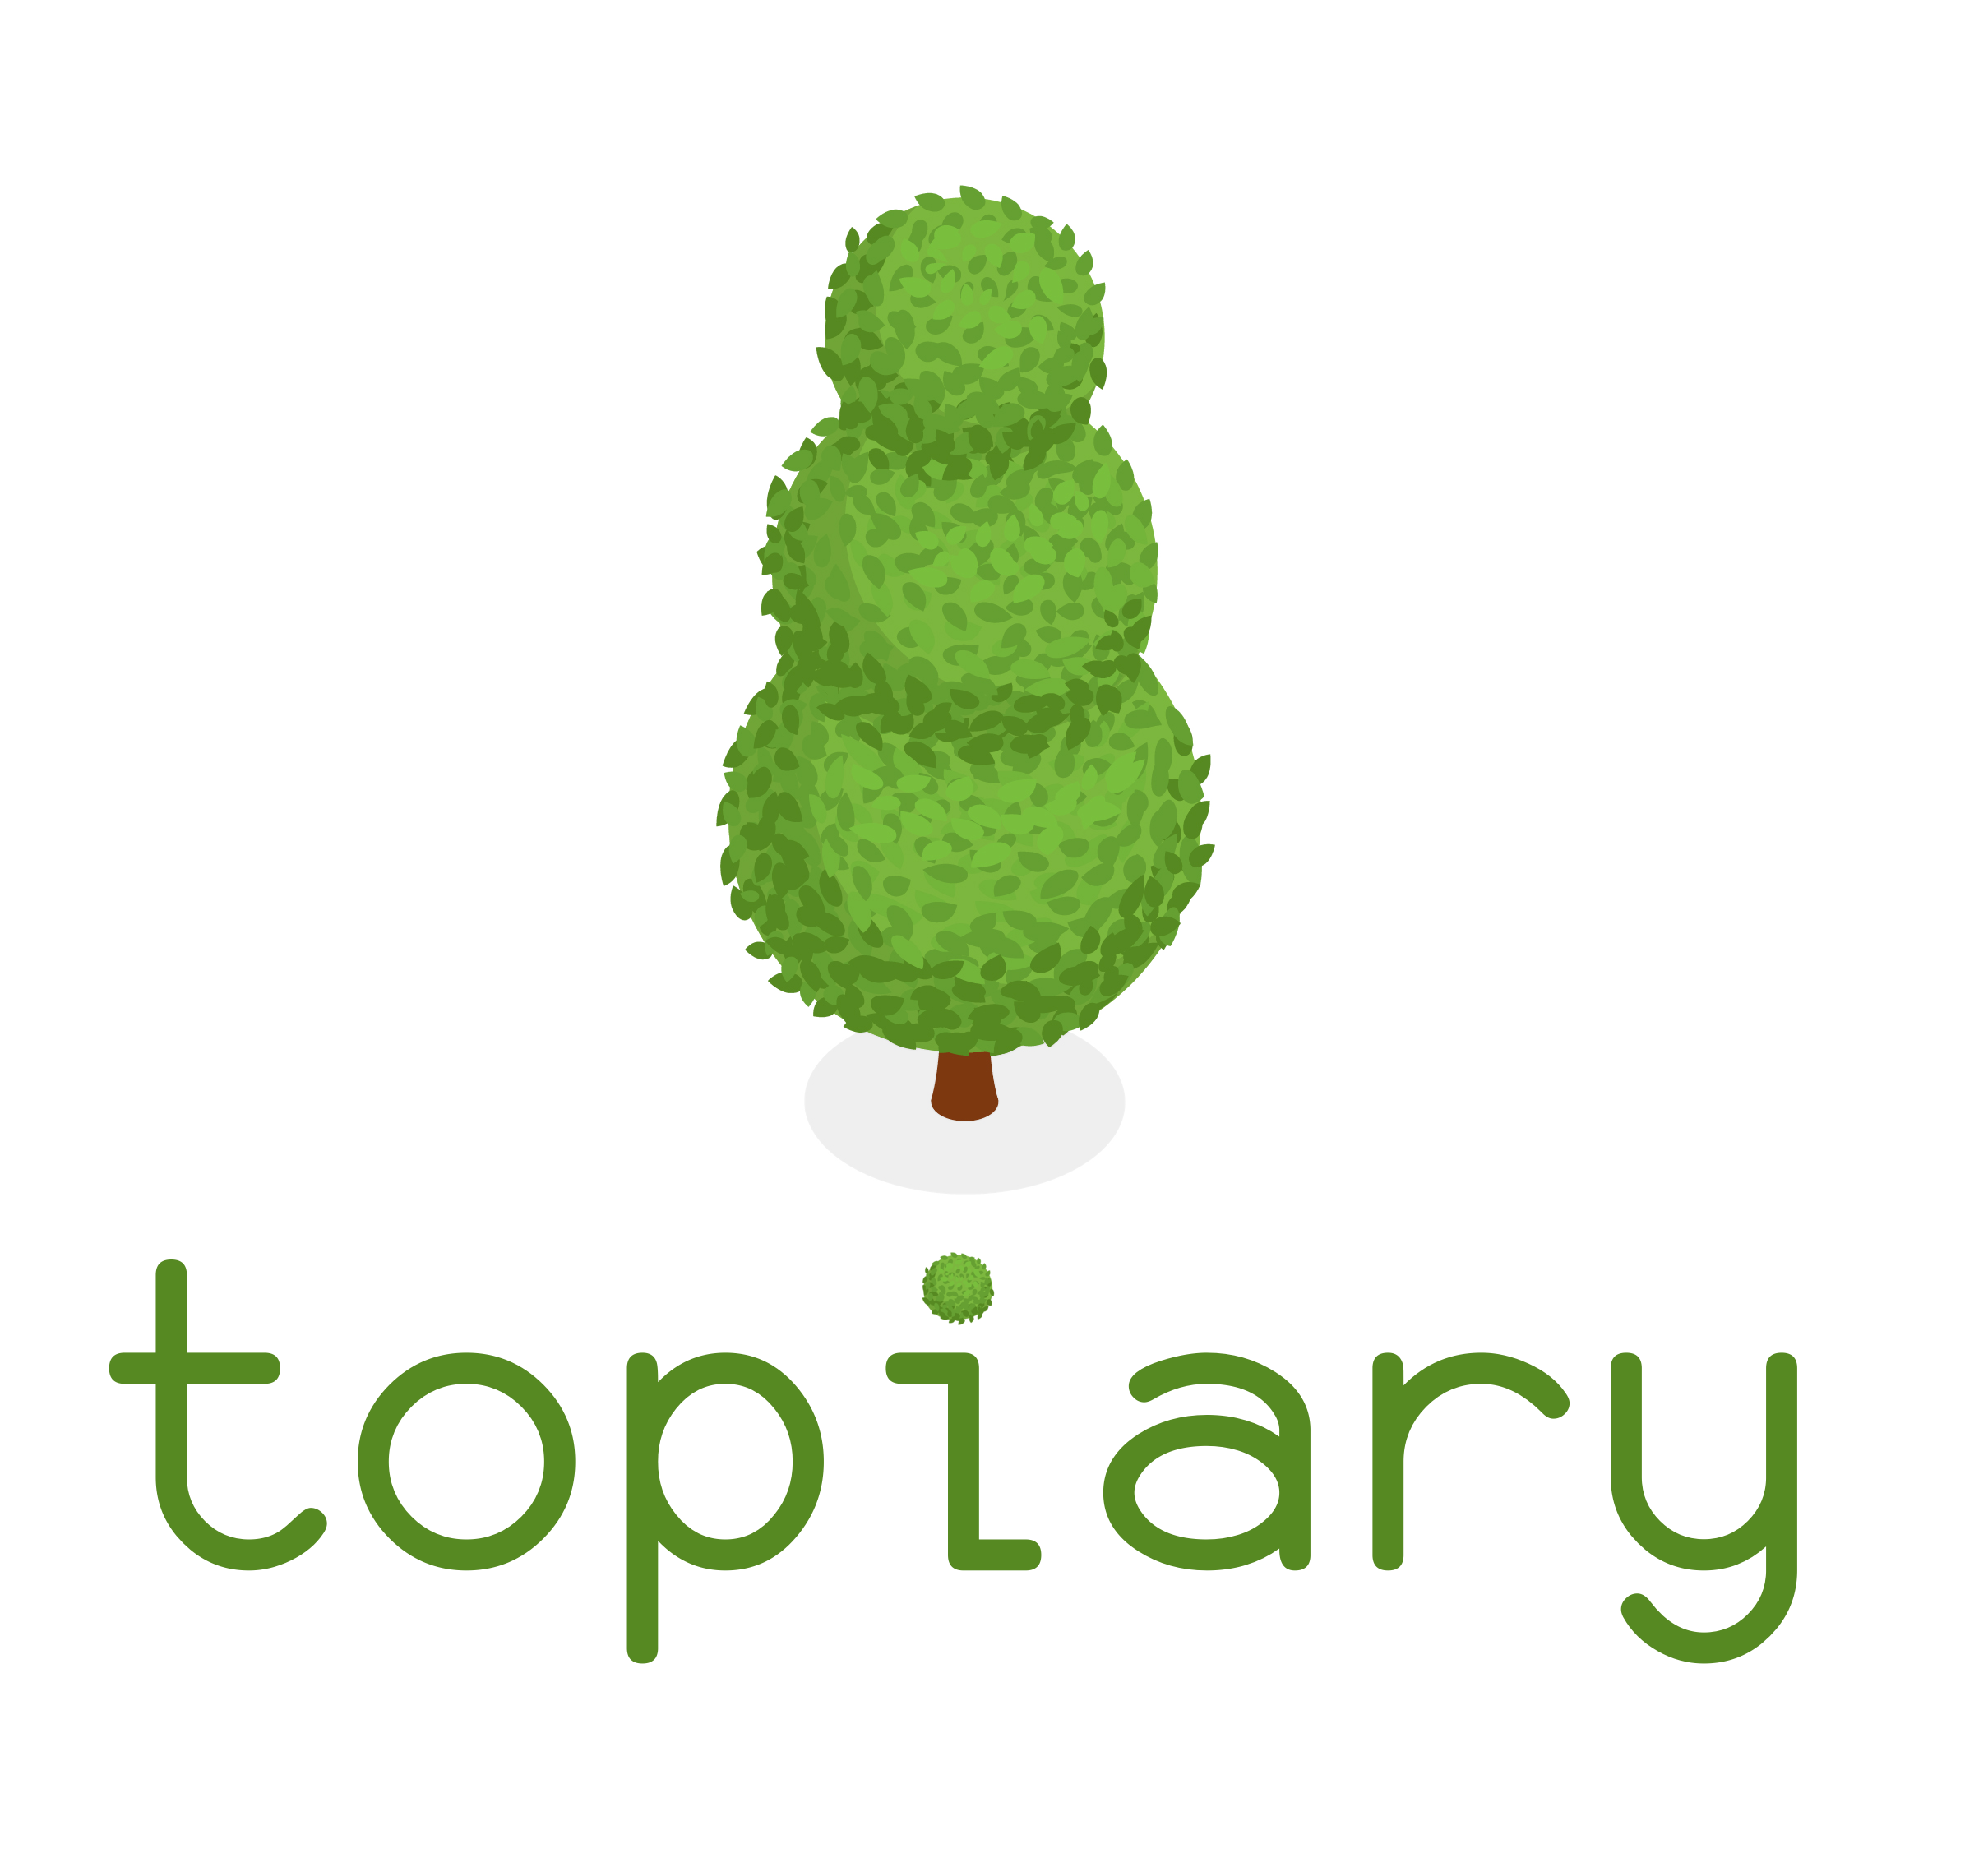 Topiary logo